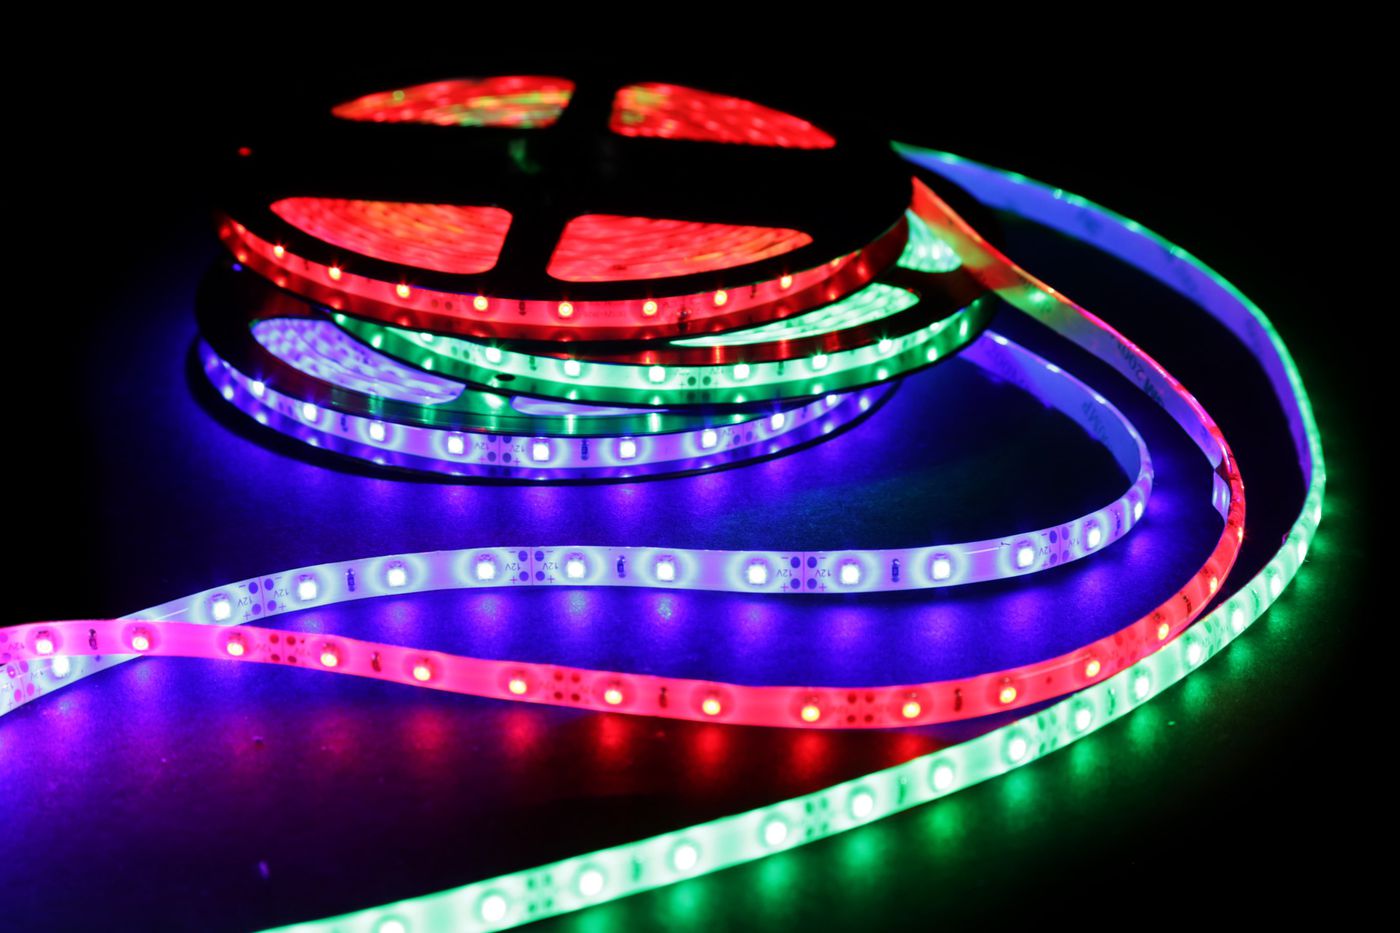 Bestil de bedste LED strips til prisen på nettet